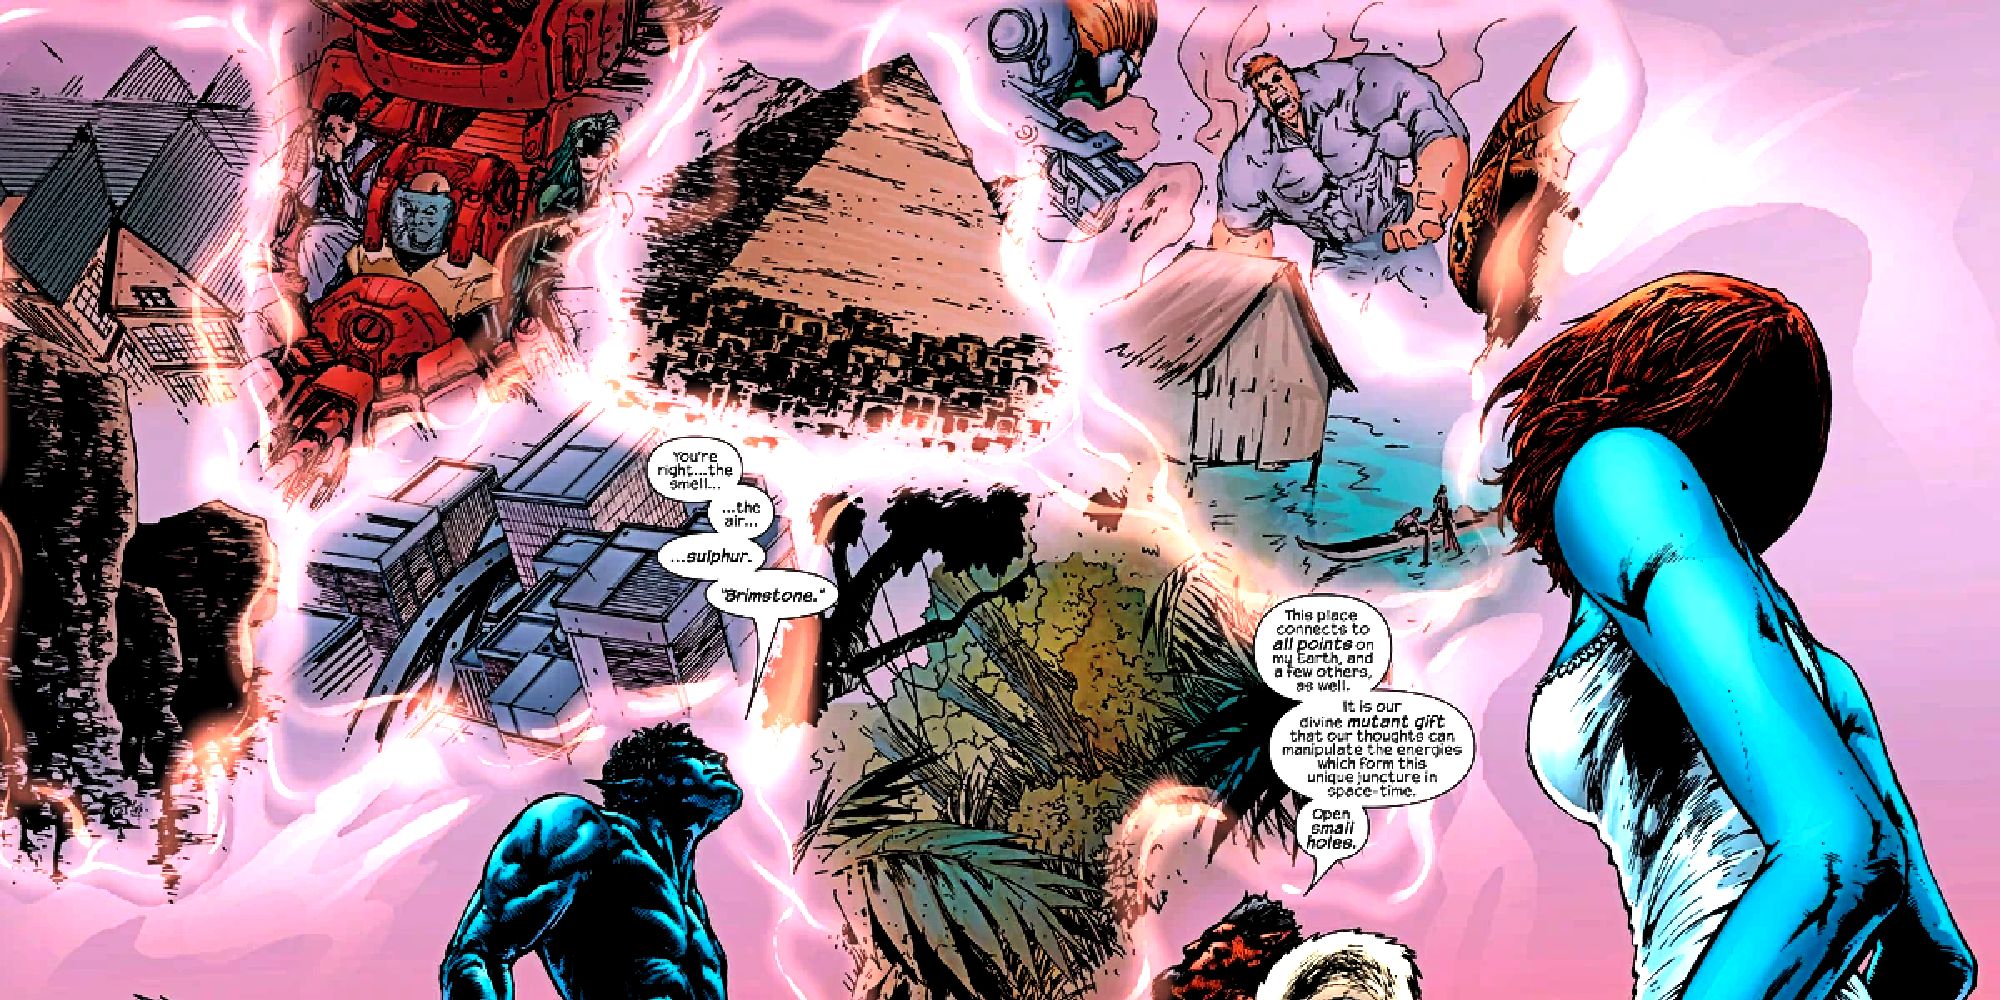 Nightcrawler understands the Brimstone Dimension in X-Men comics